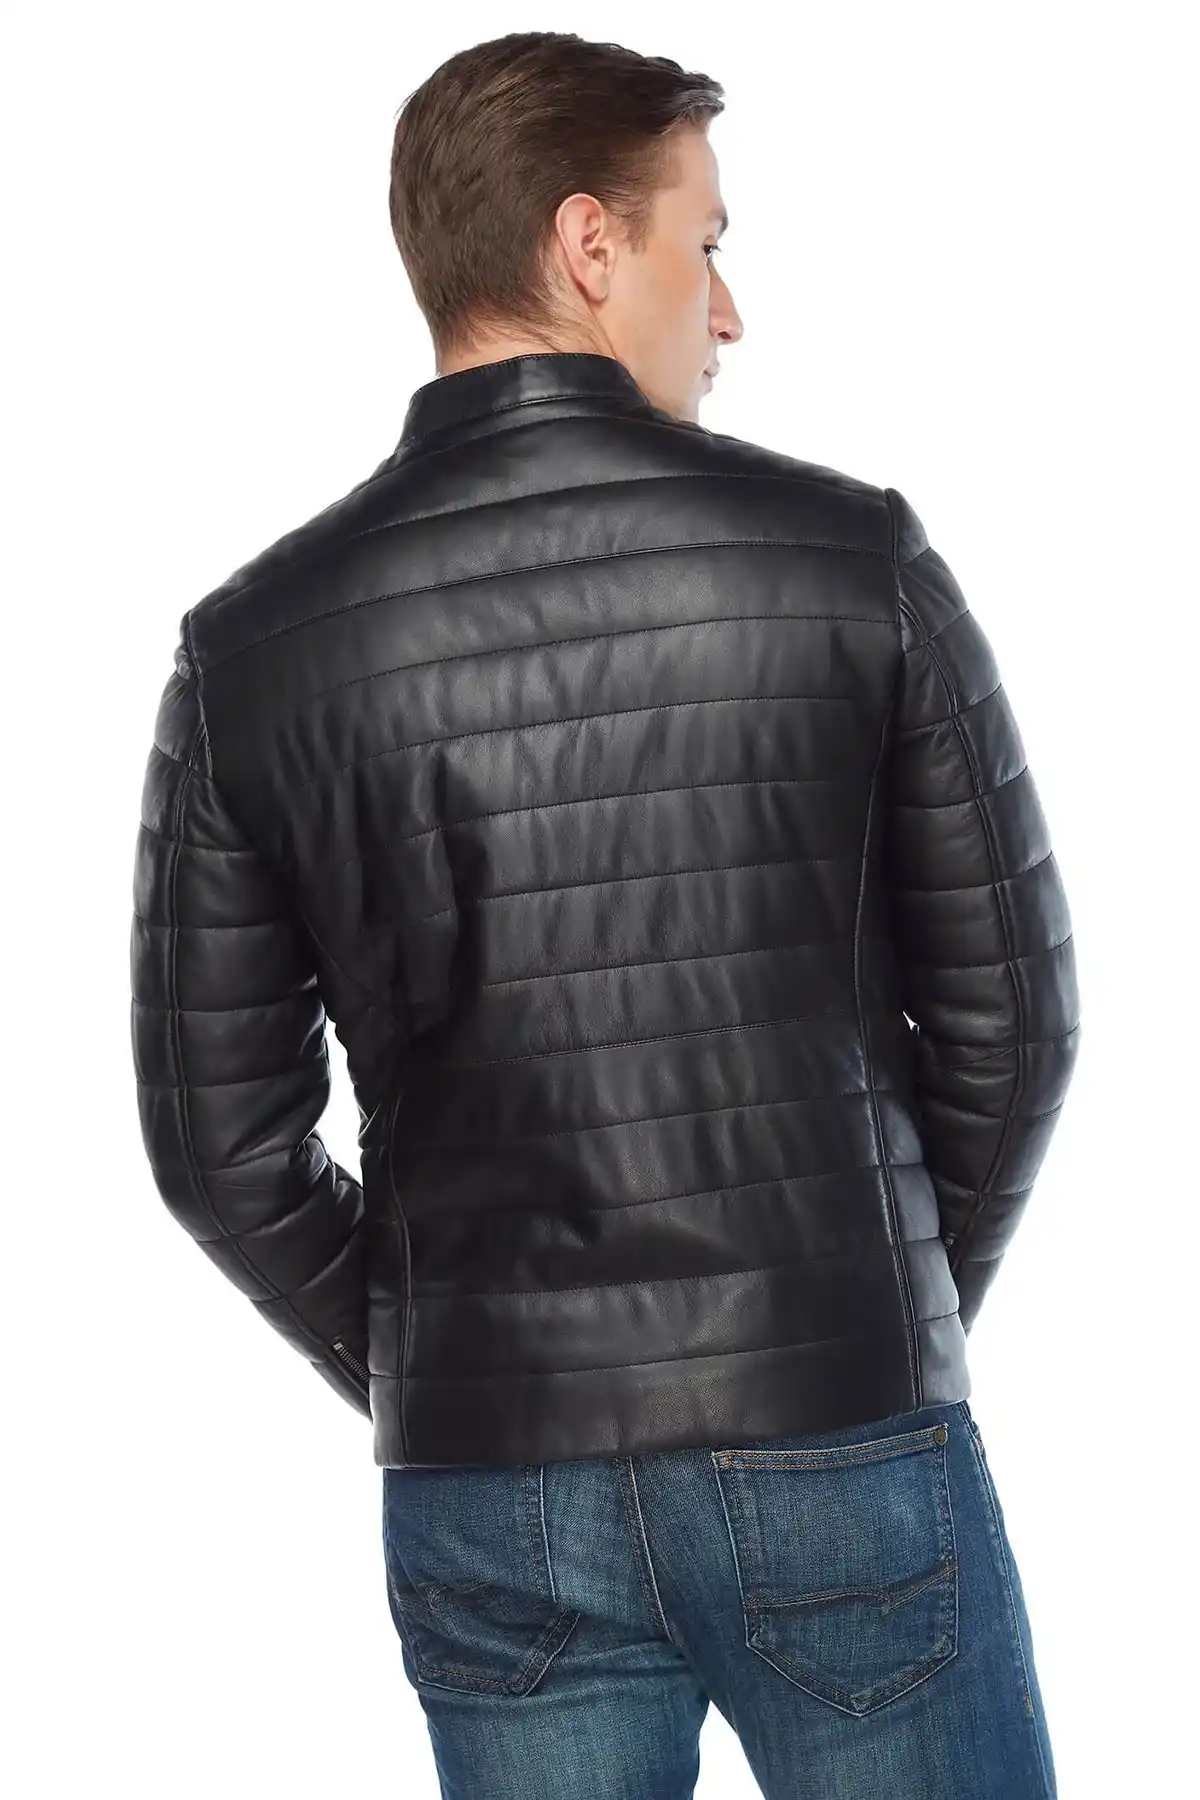 Genuine Black Leather Men’s Puffer Jacket